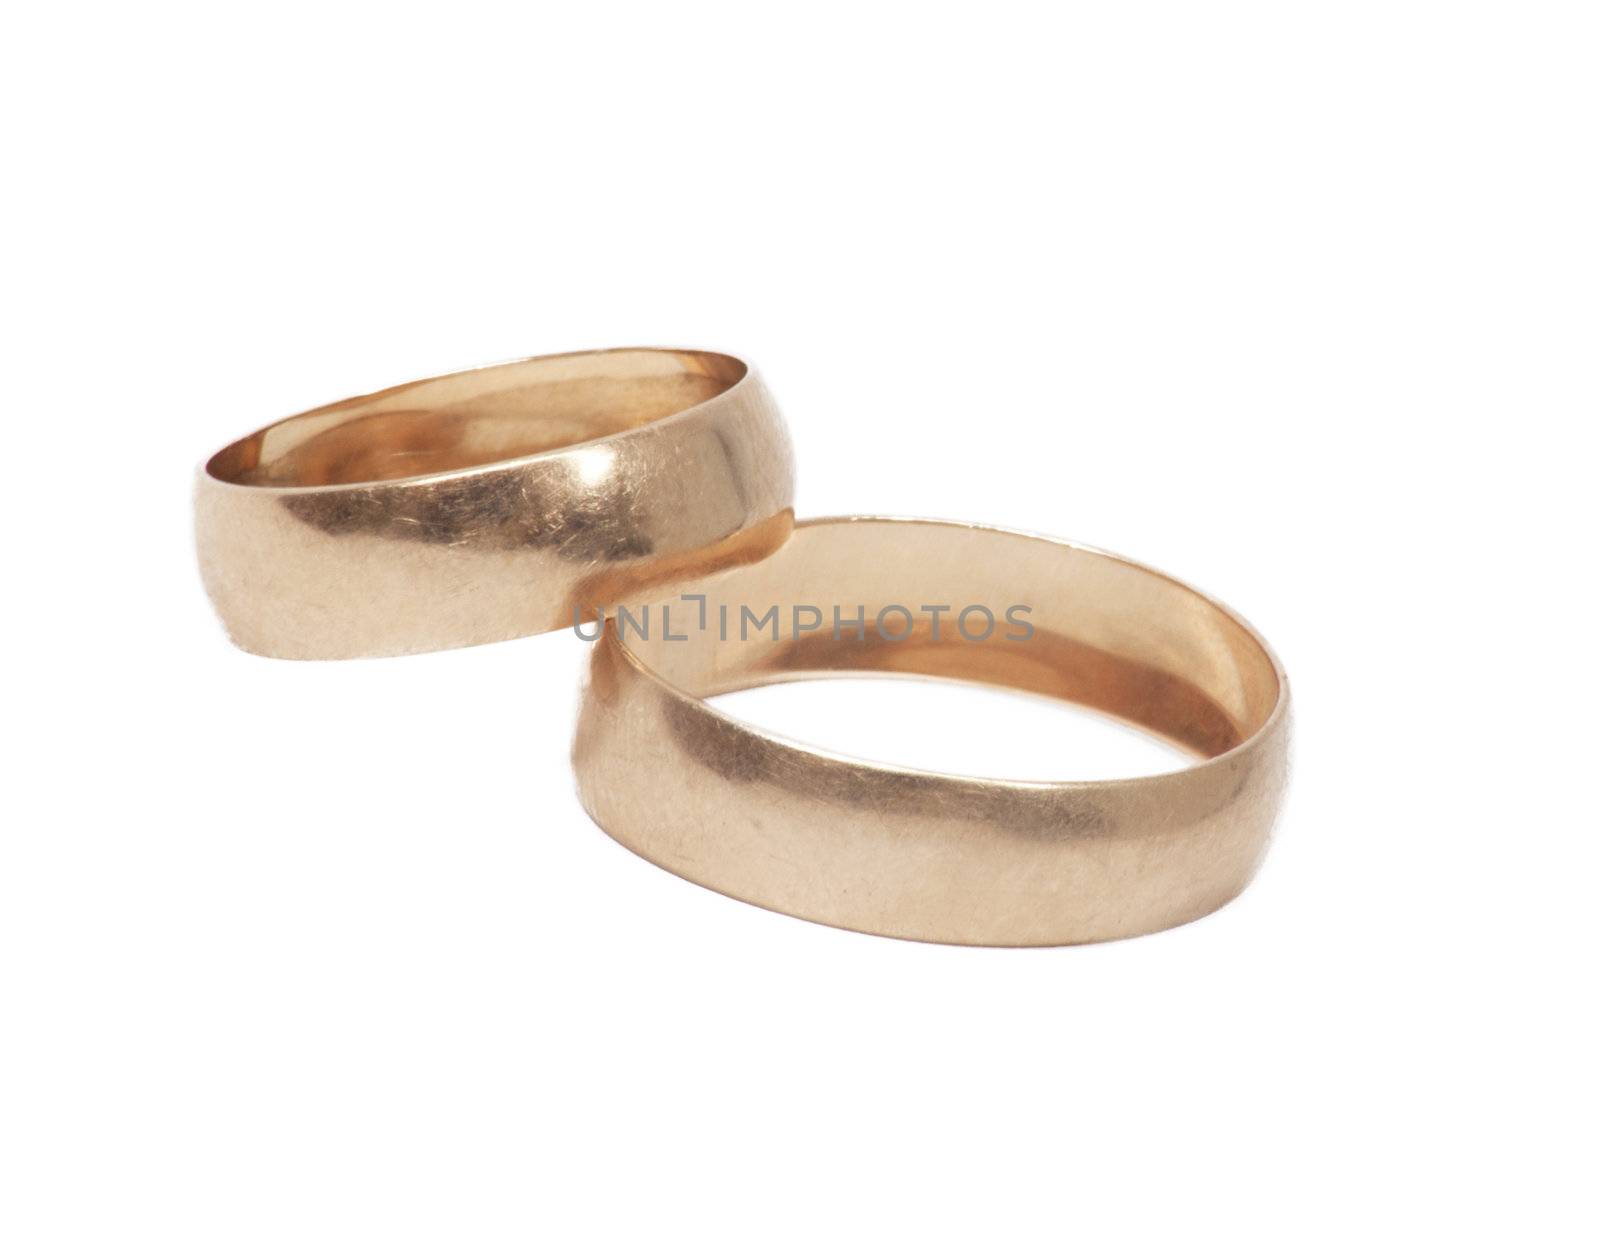 Two golden wedding rings  by schankz